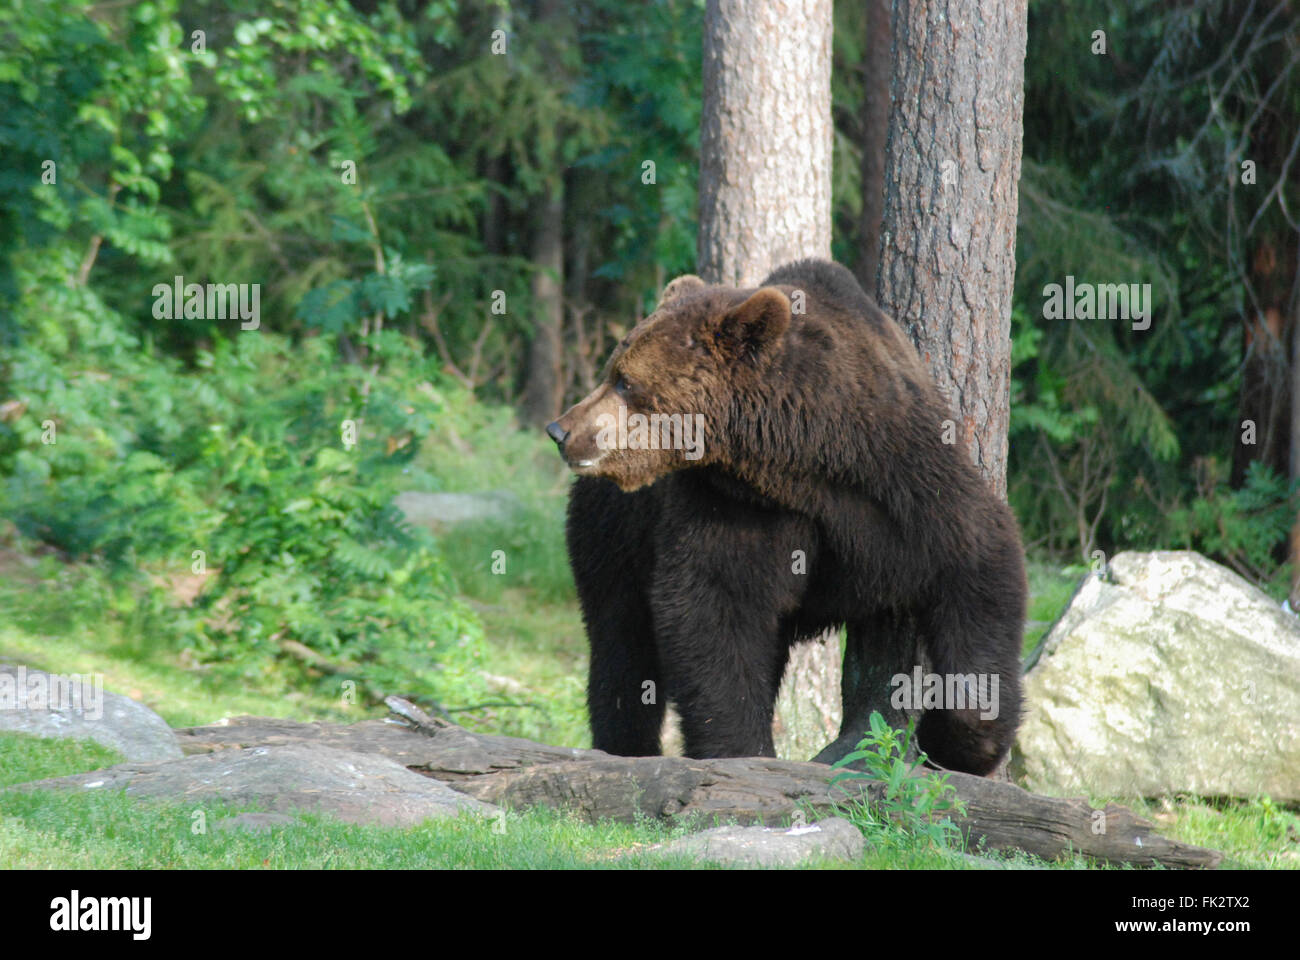 European brown bear or Eurasian brown bear (Ursus arctos arctos) in Taiga forest in eastern Finland. Stock Photo